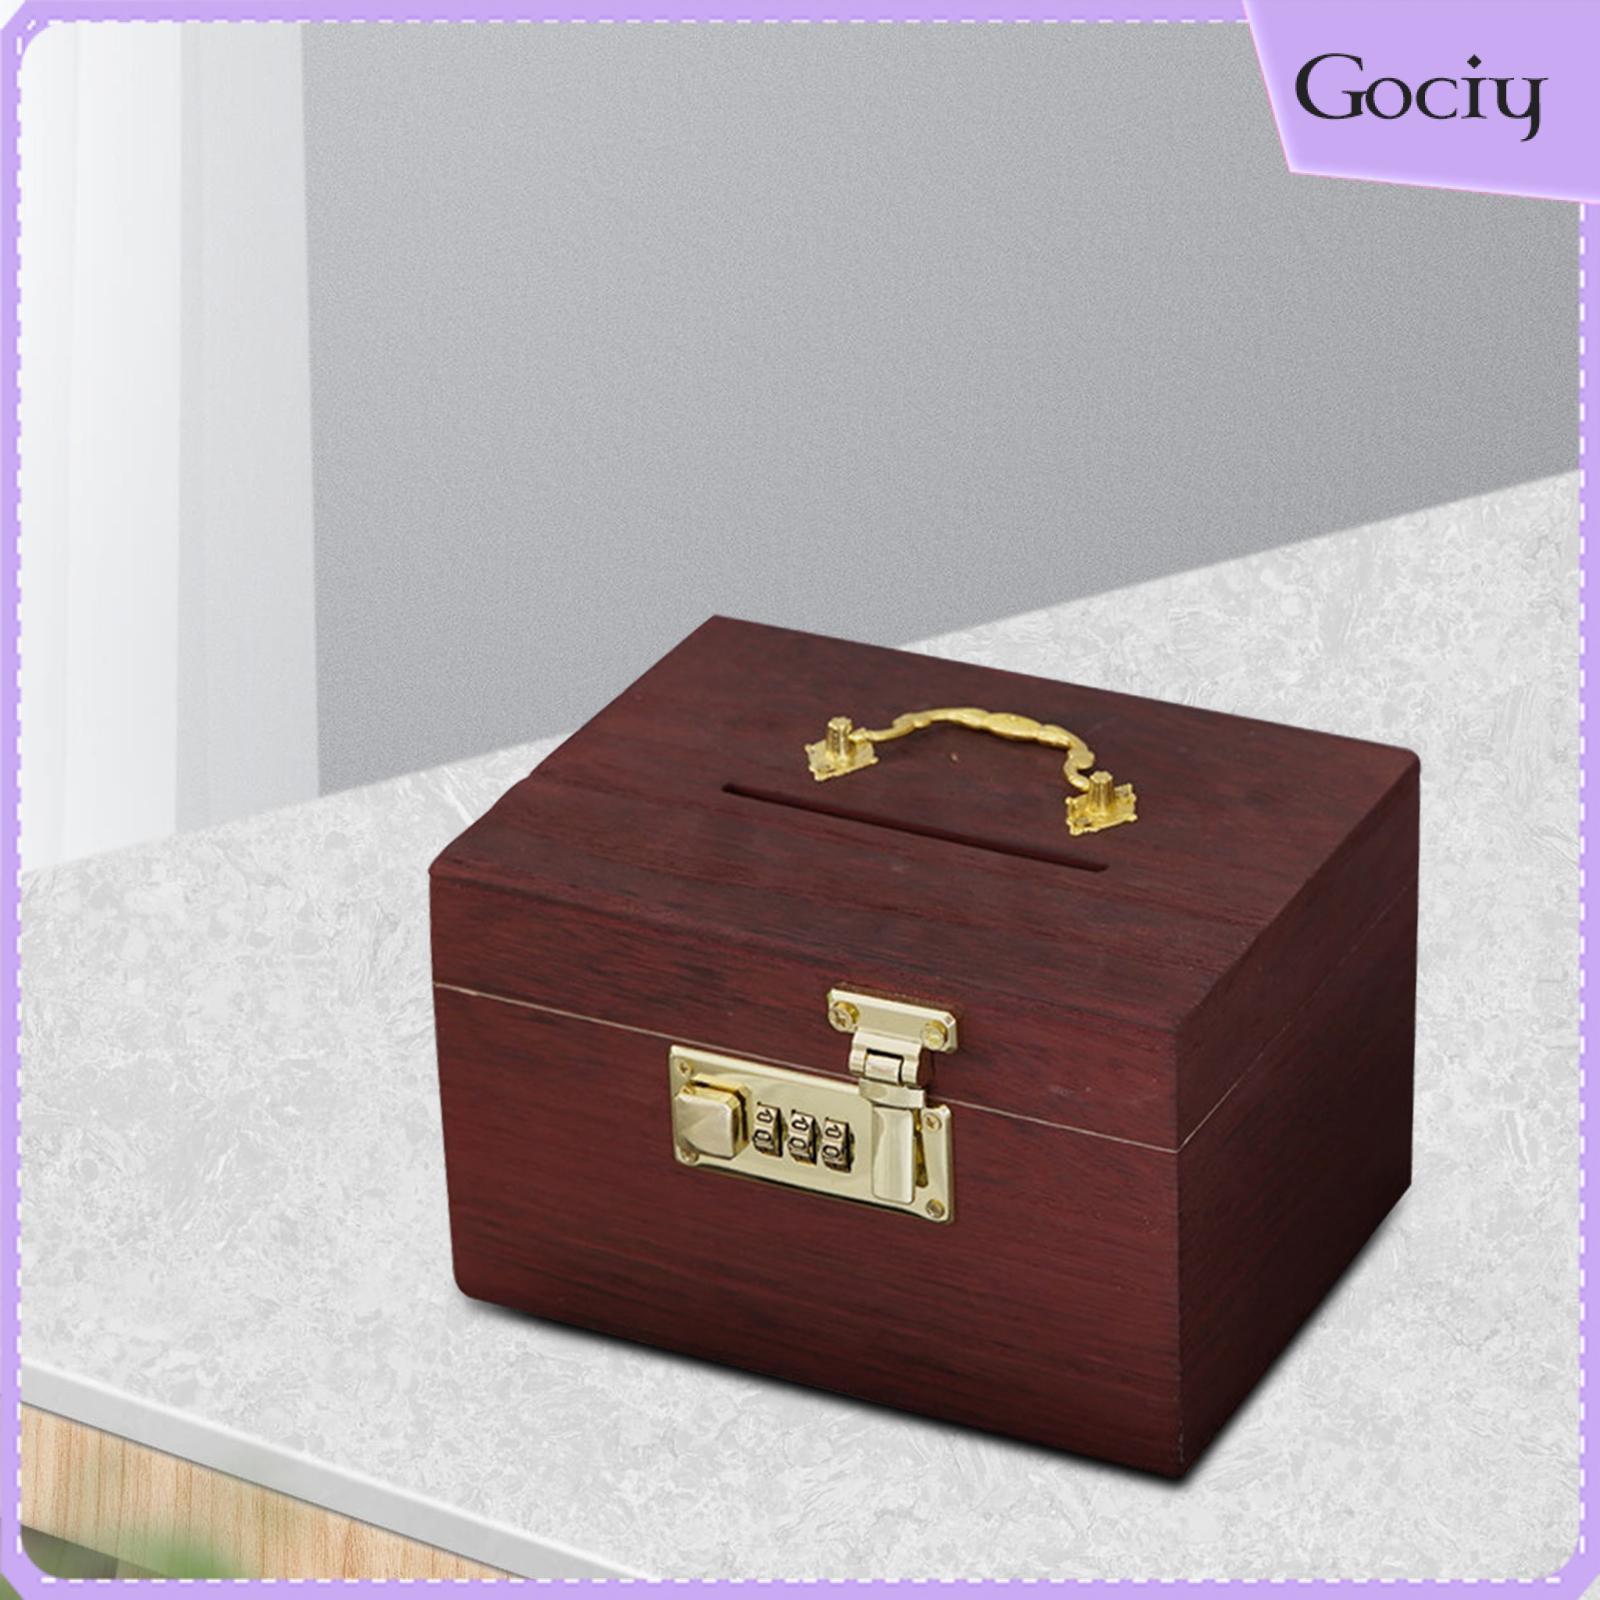 Gociy wooden piggy bank organizer treasure storage box decorative saving - ảnh sản phẩm 1